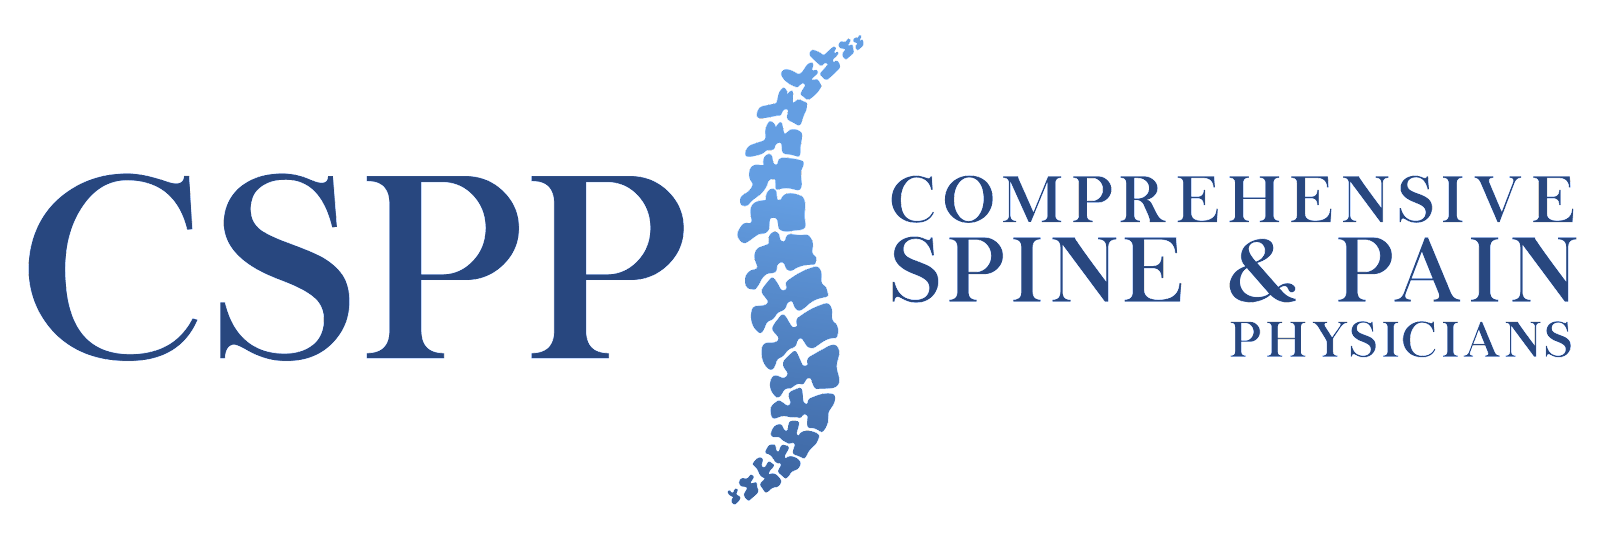 Comprehensive Spine & Pain Physicians - Pasadena Logo